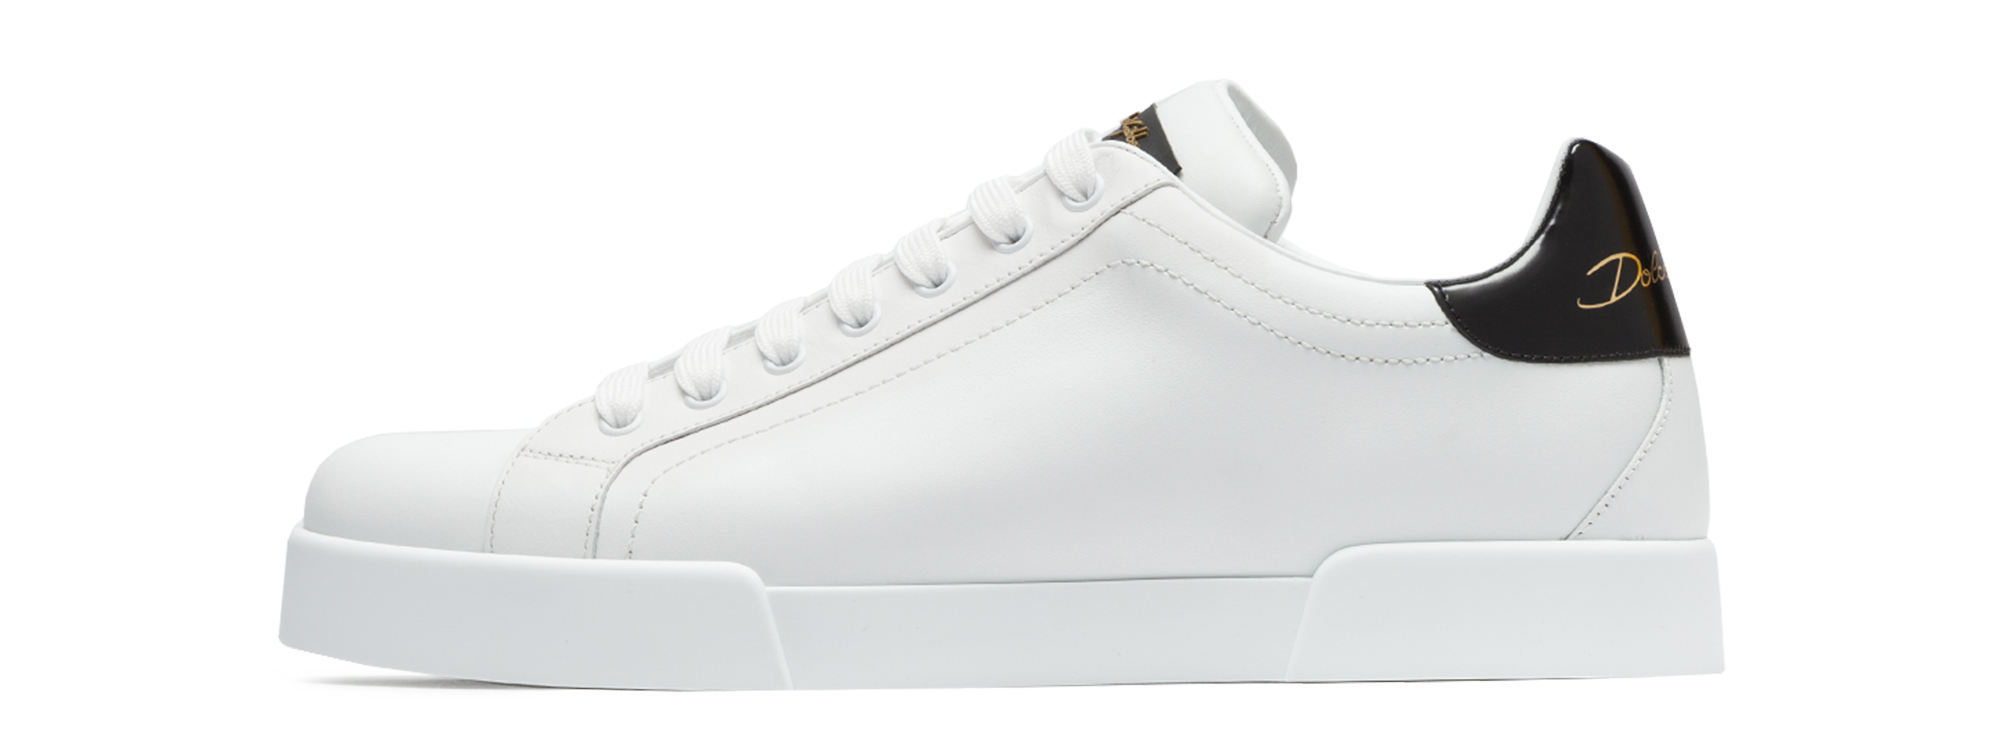 dolce & gabbana white sneakers